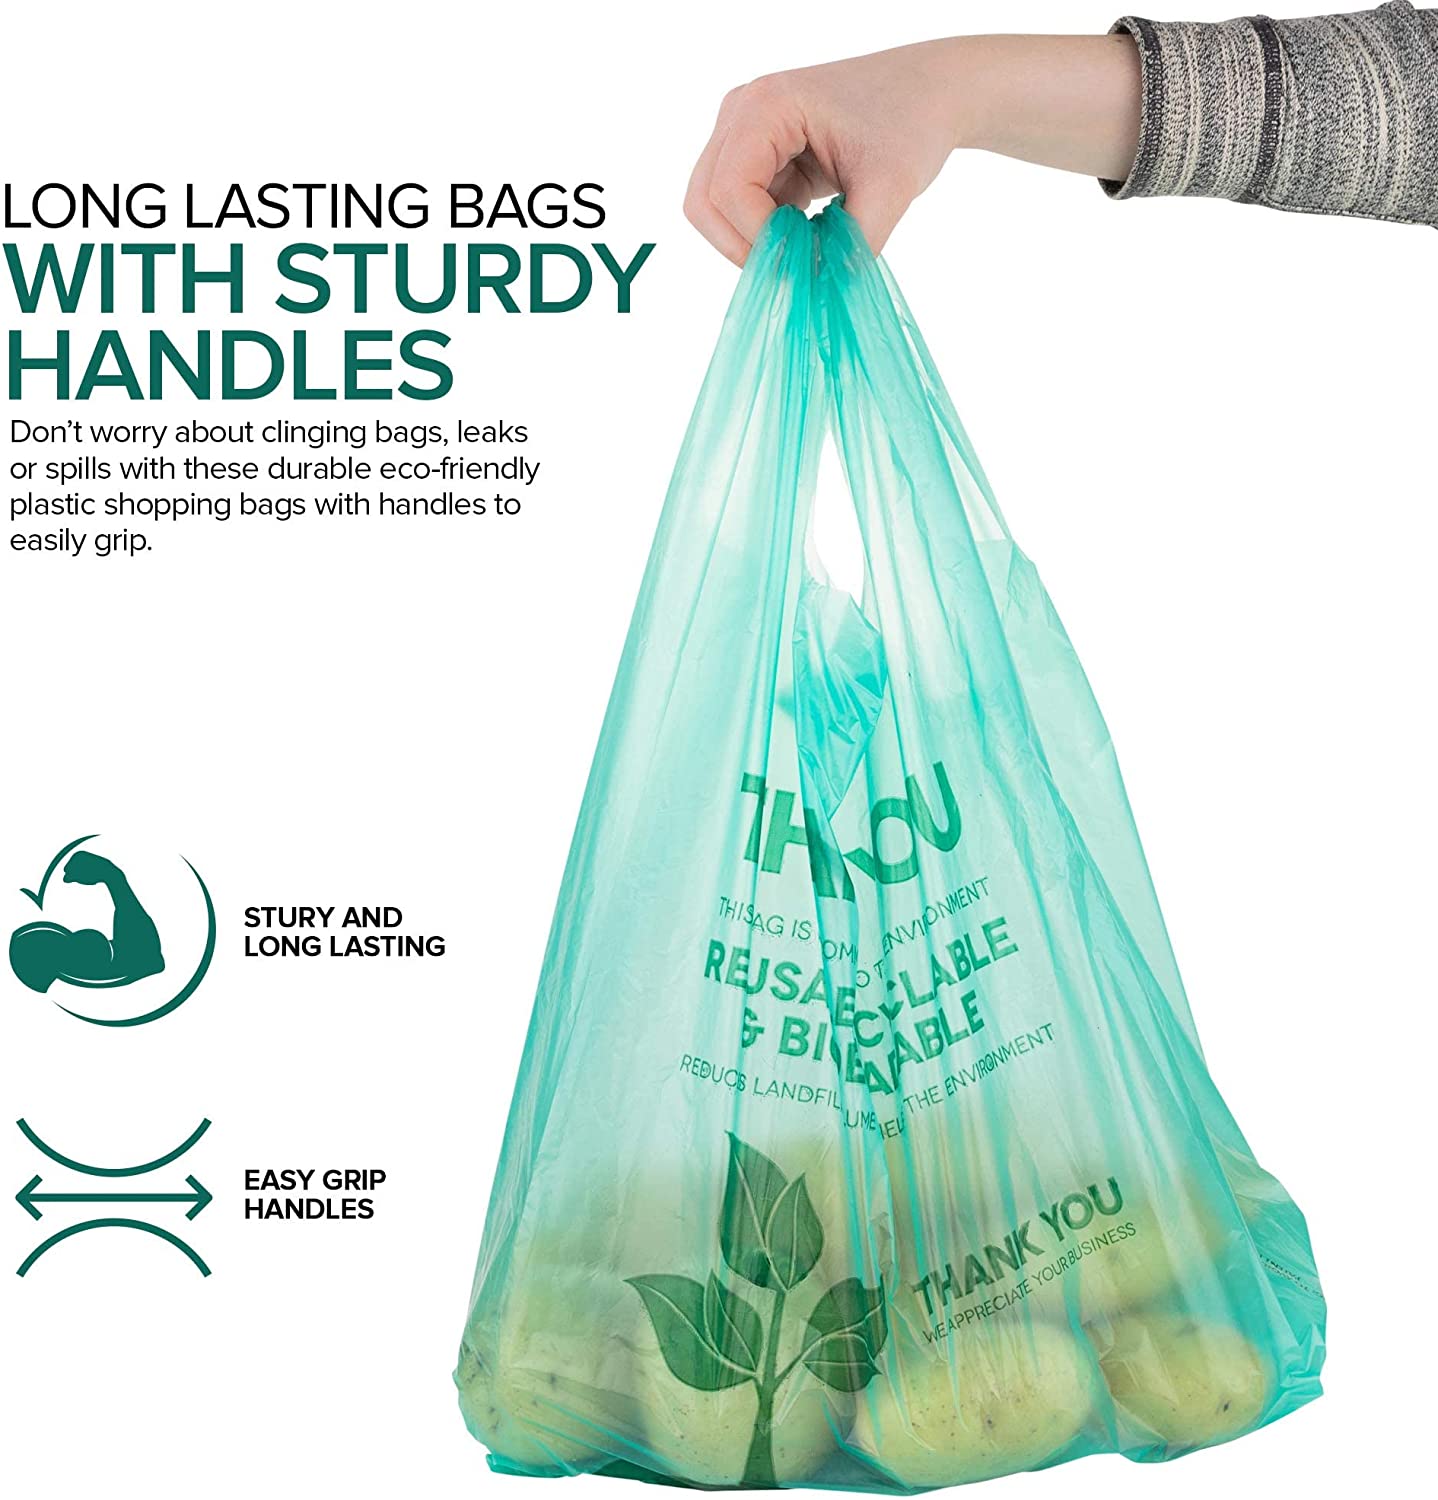 Salem plastic bag ban: Retailers to scrap shopping bags by April 1